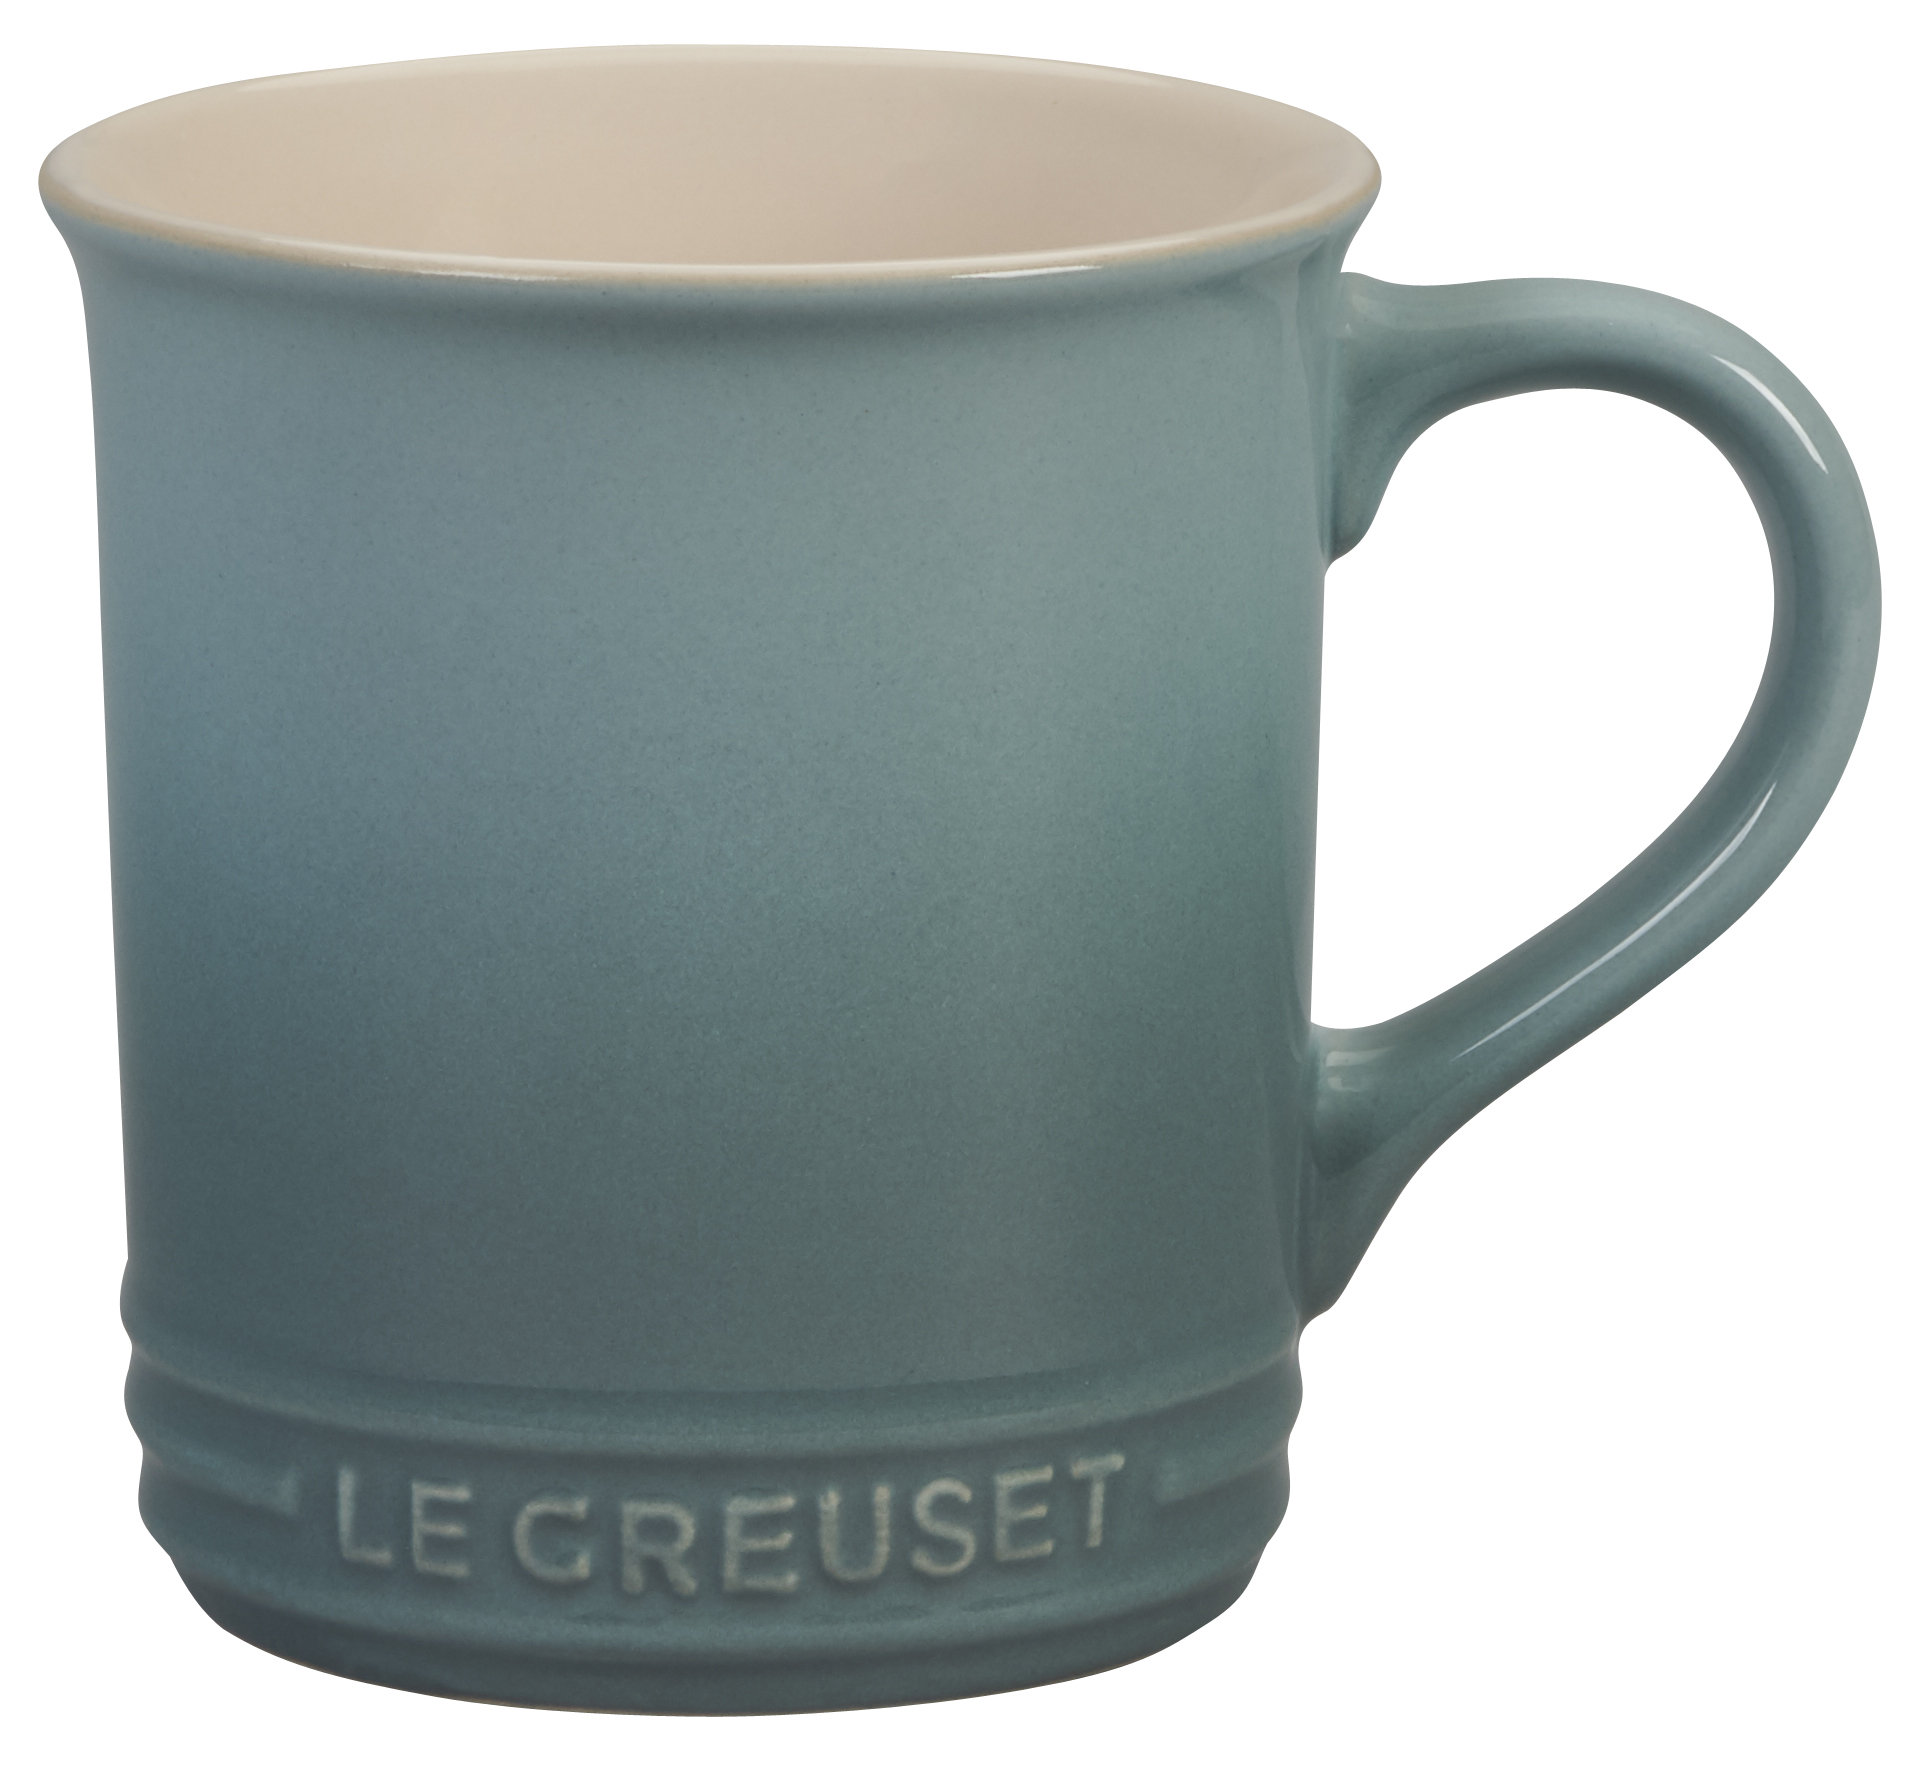 Le Creuset Heritage 13-oz. Mugs, Set of 4